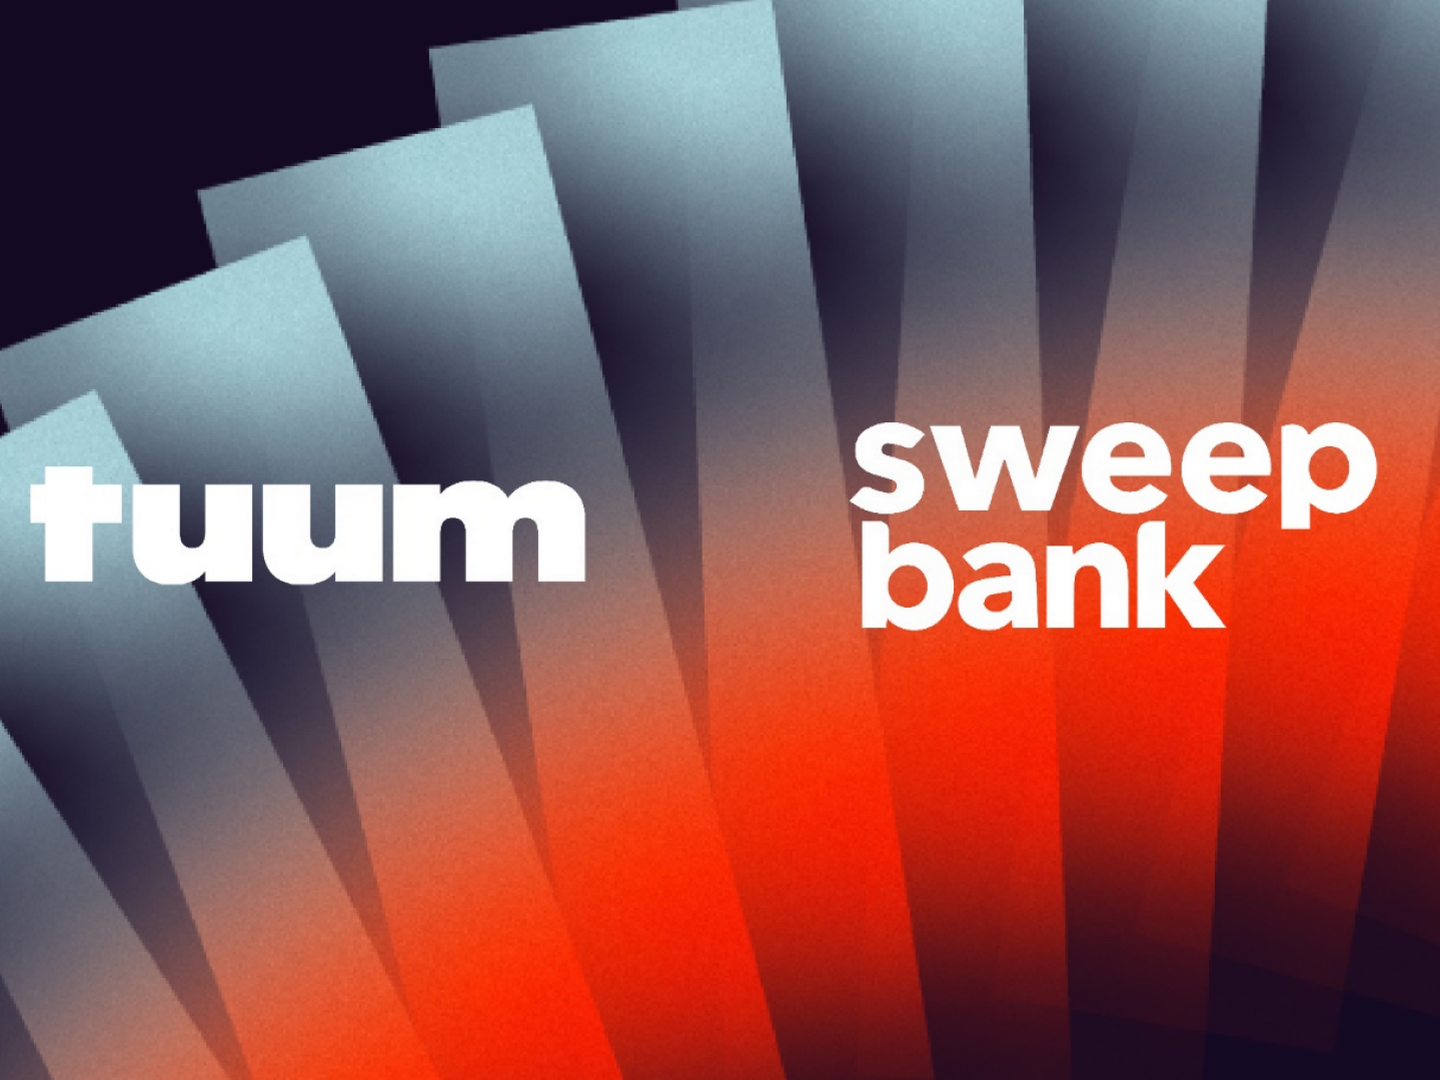 Die Logos von Tuum und Sweepbank | Foto: Tuum/Sweepbank